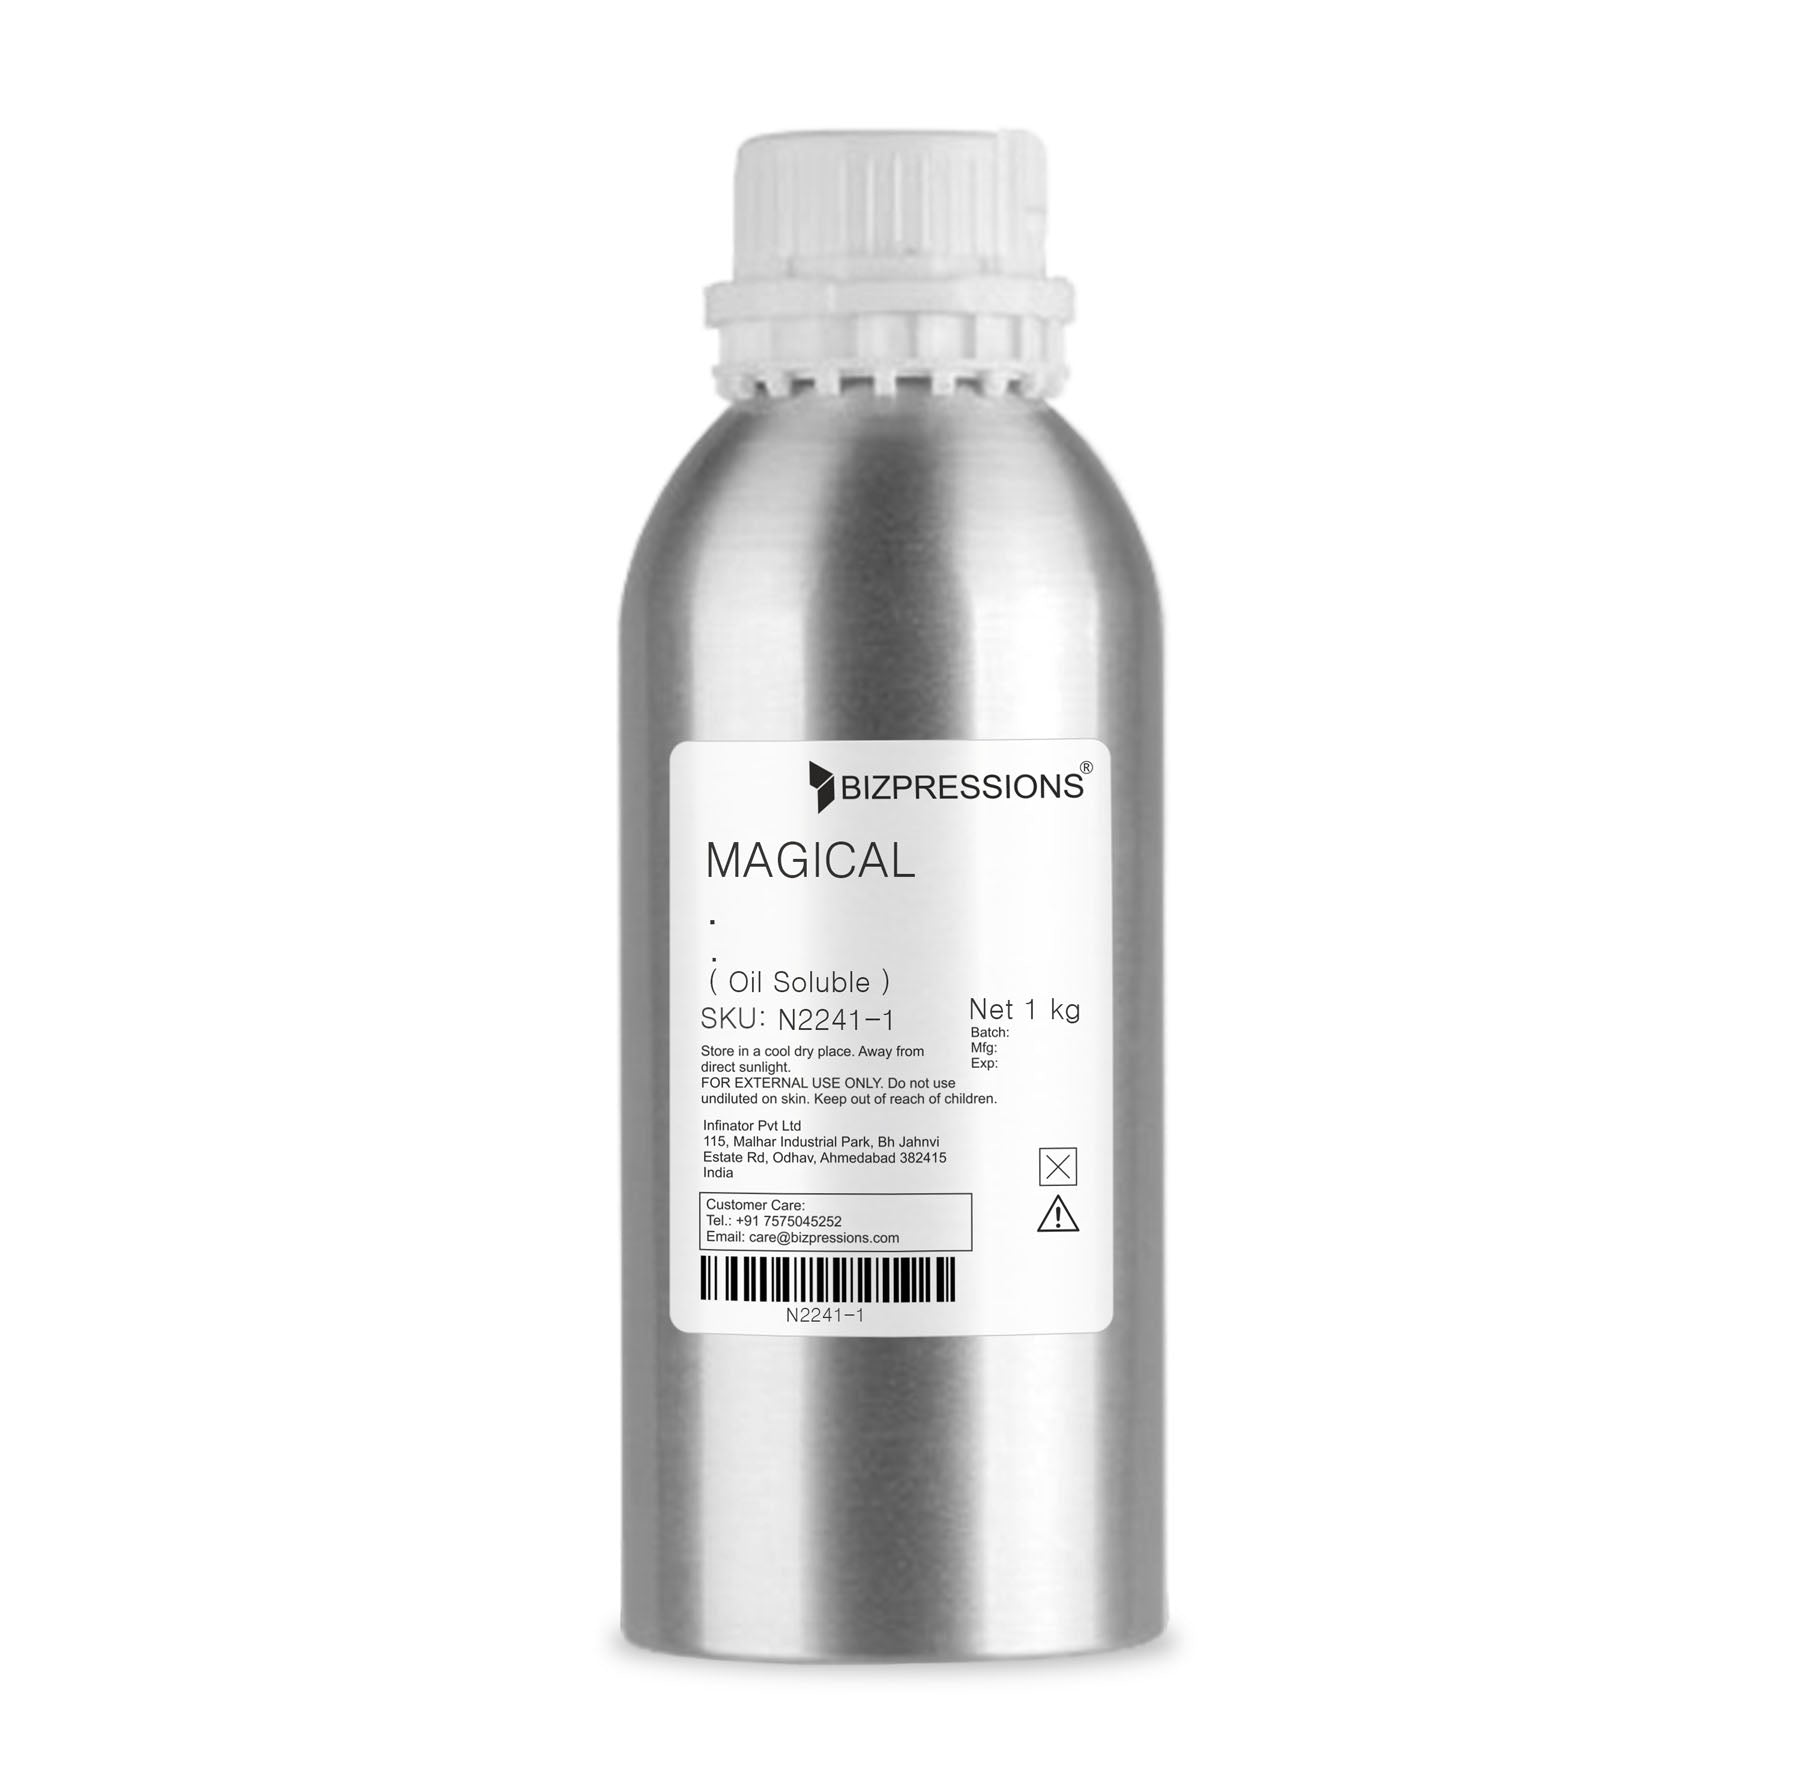 MAGICAL - Fragrance ( Oil Soluble ) - 1 kg